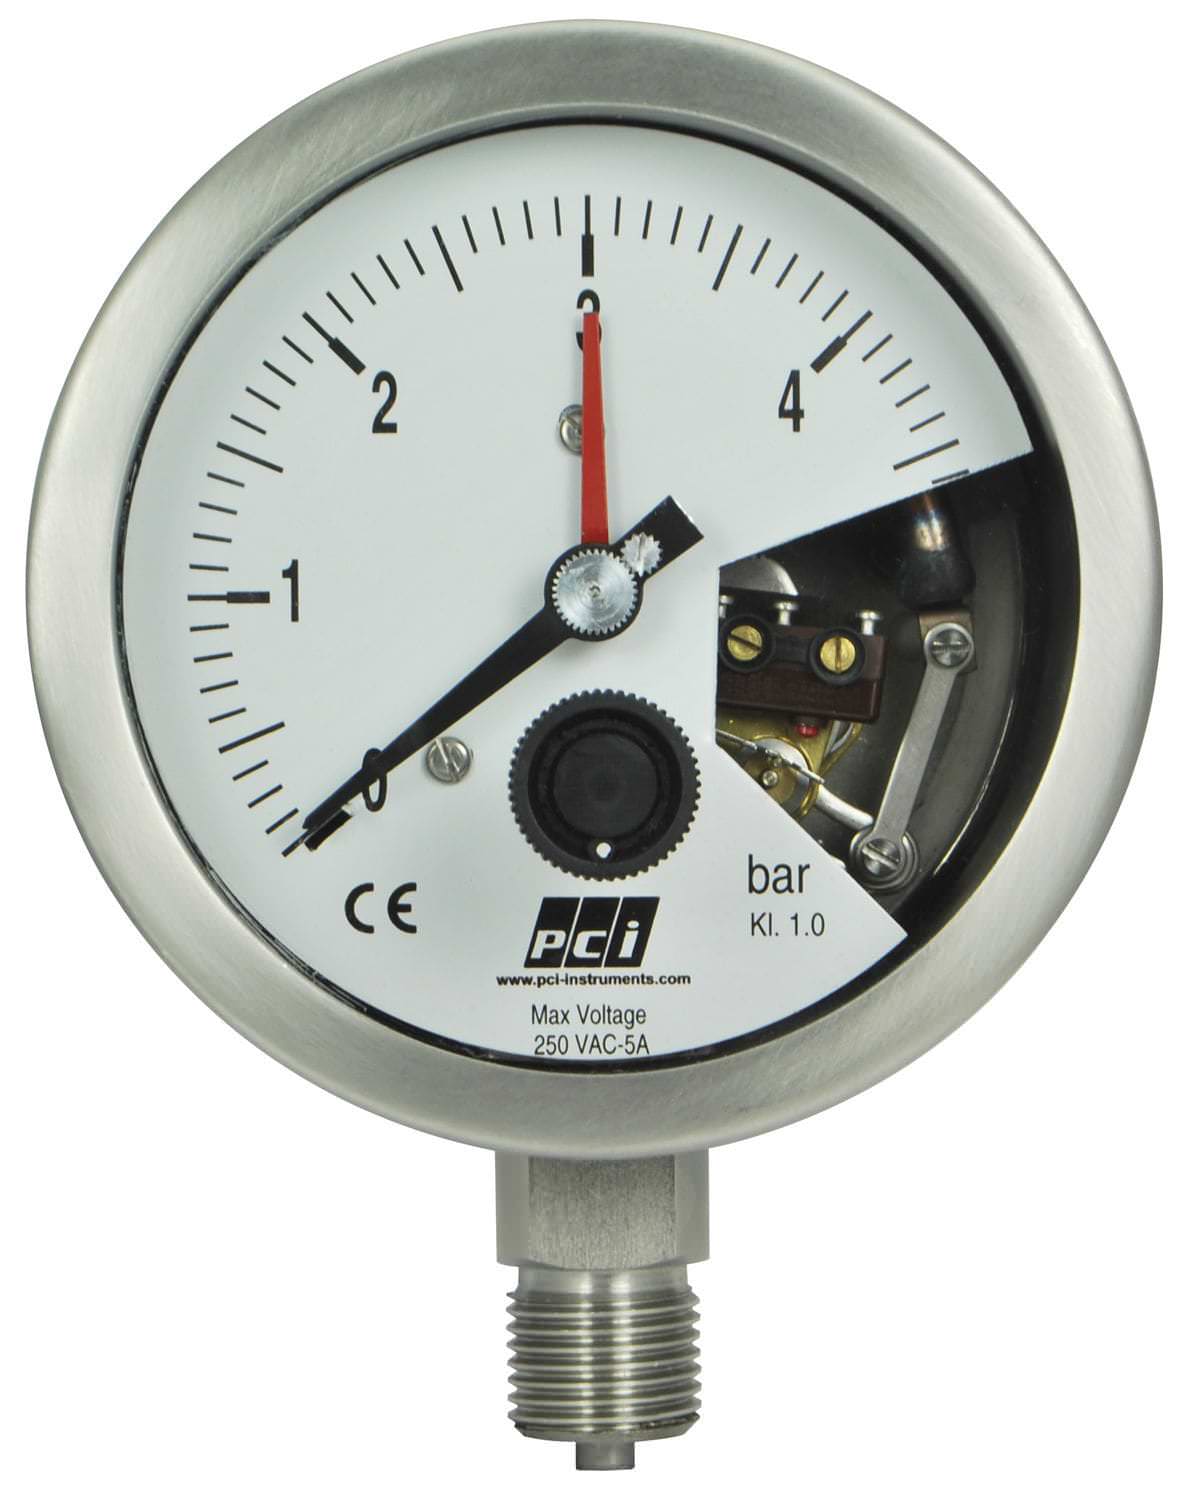 Однополярный микропереключатель для манометра для термометра TP300 + ZH PCI Instruments Ltd